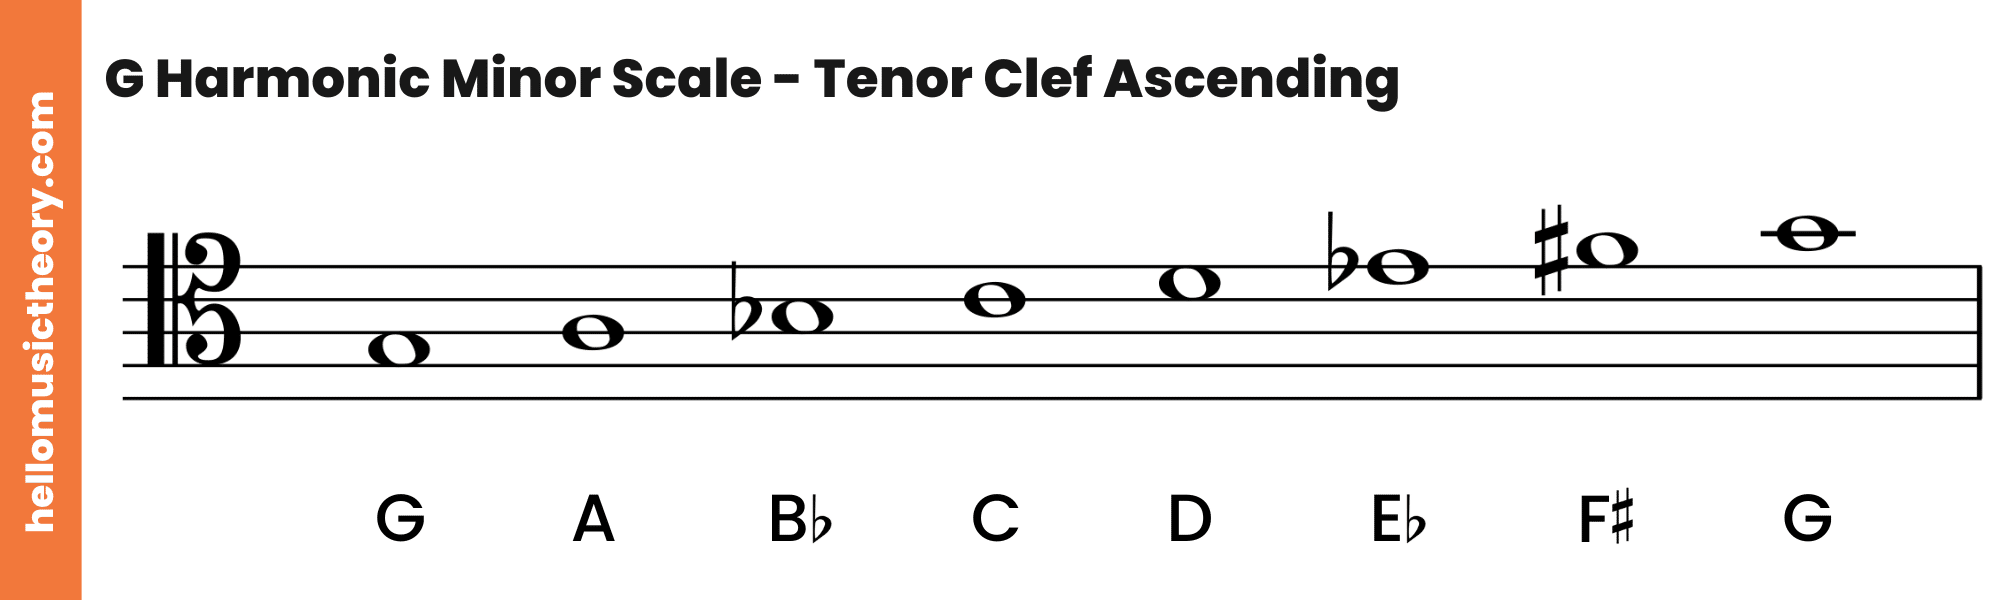 G Harmonic Minor Scale Tenor Clef Ascending